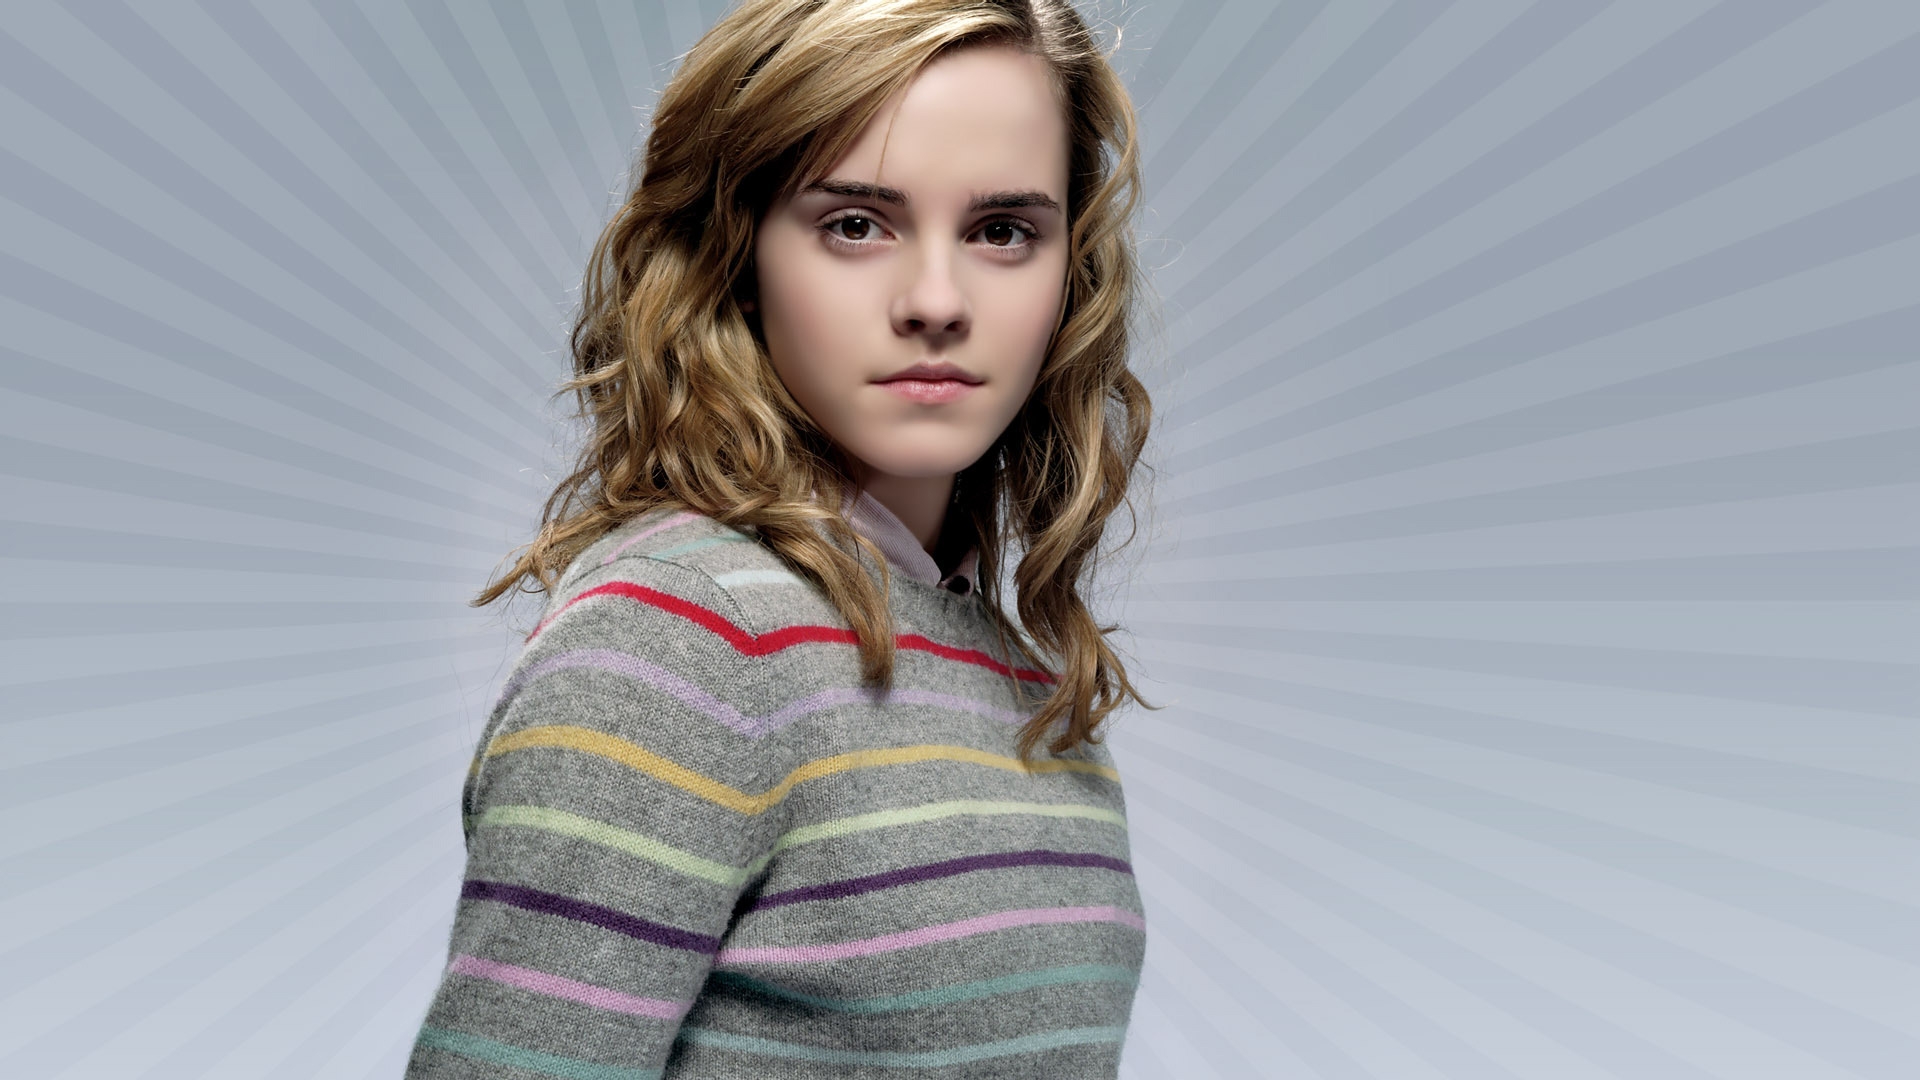 Beautiful Emma Watson for 1920 x 1080 HDTV 1080p resolution